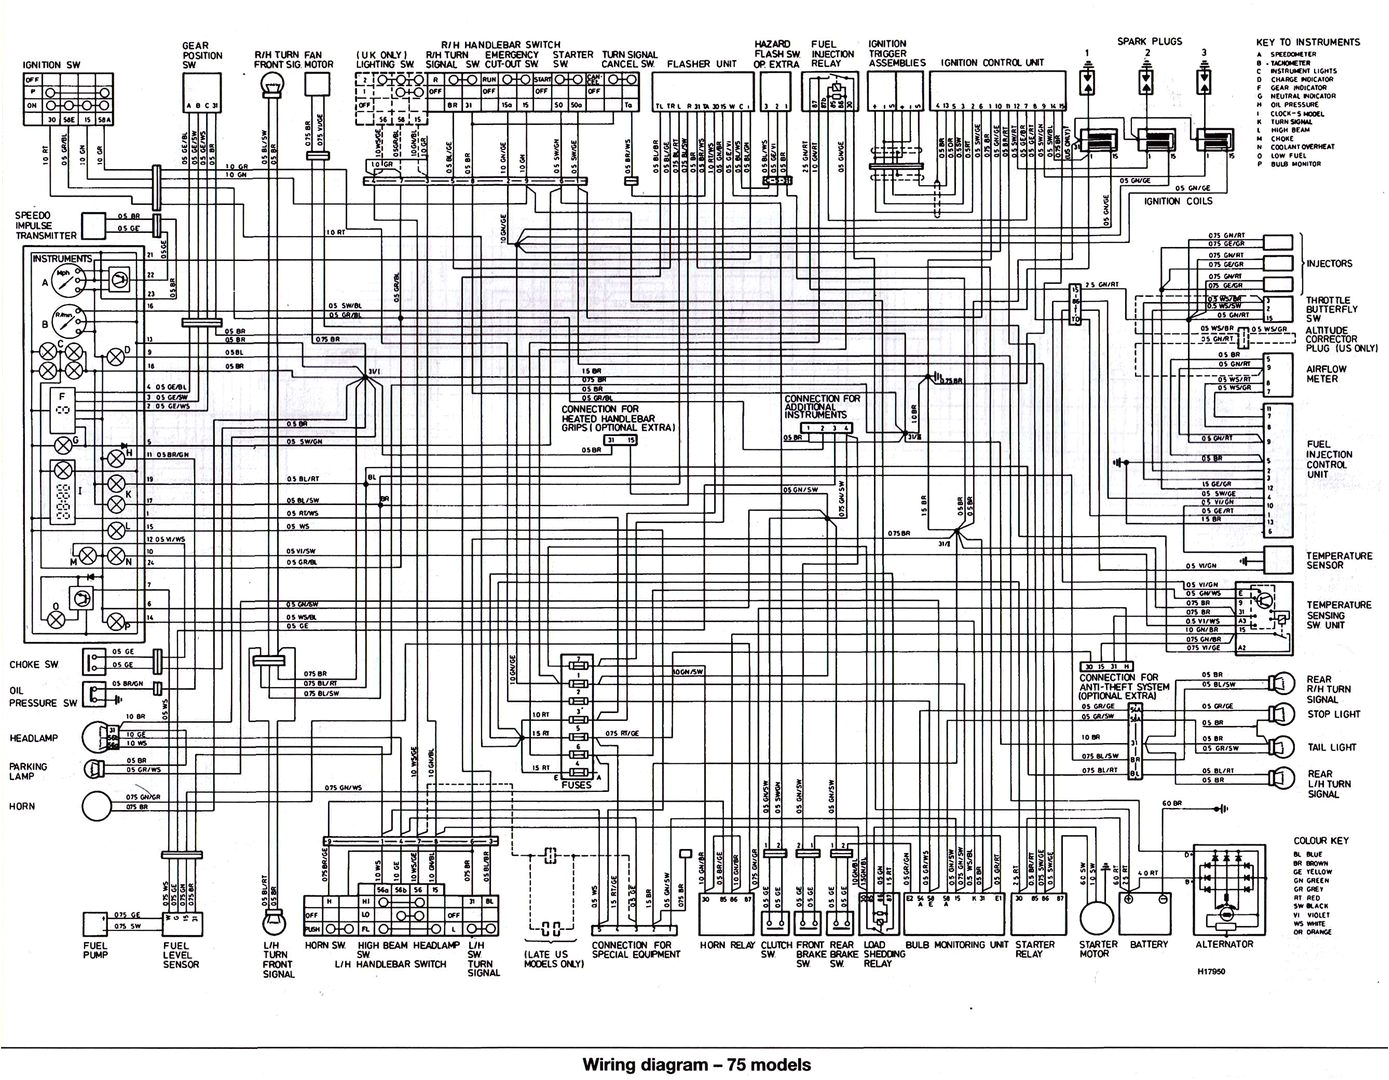 wiring diagram bmw k75 along with 1985 bmw k100 fuel pump wiringbmw k75 electrical diagram manual